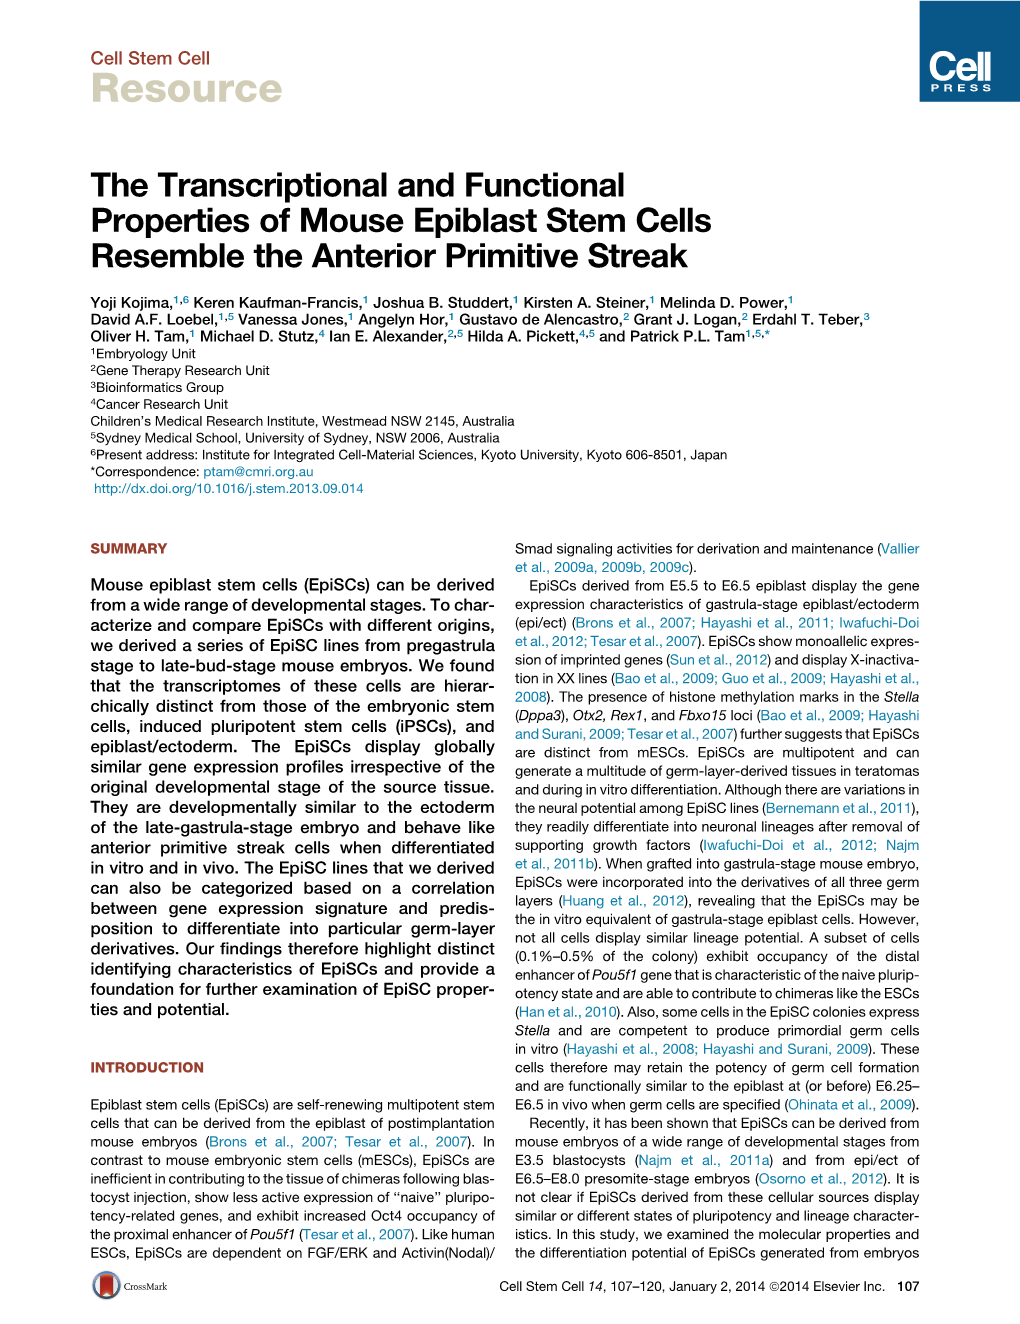 The Transcriptional and Functional Properties of Mouse Epiblast Stem Cells Resemble the Anterior Primitive Streak